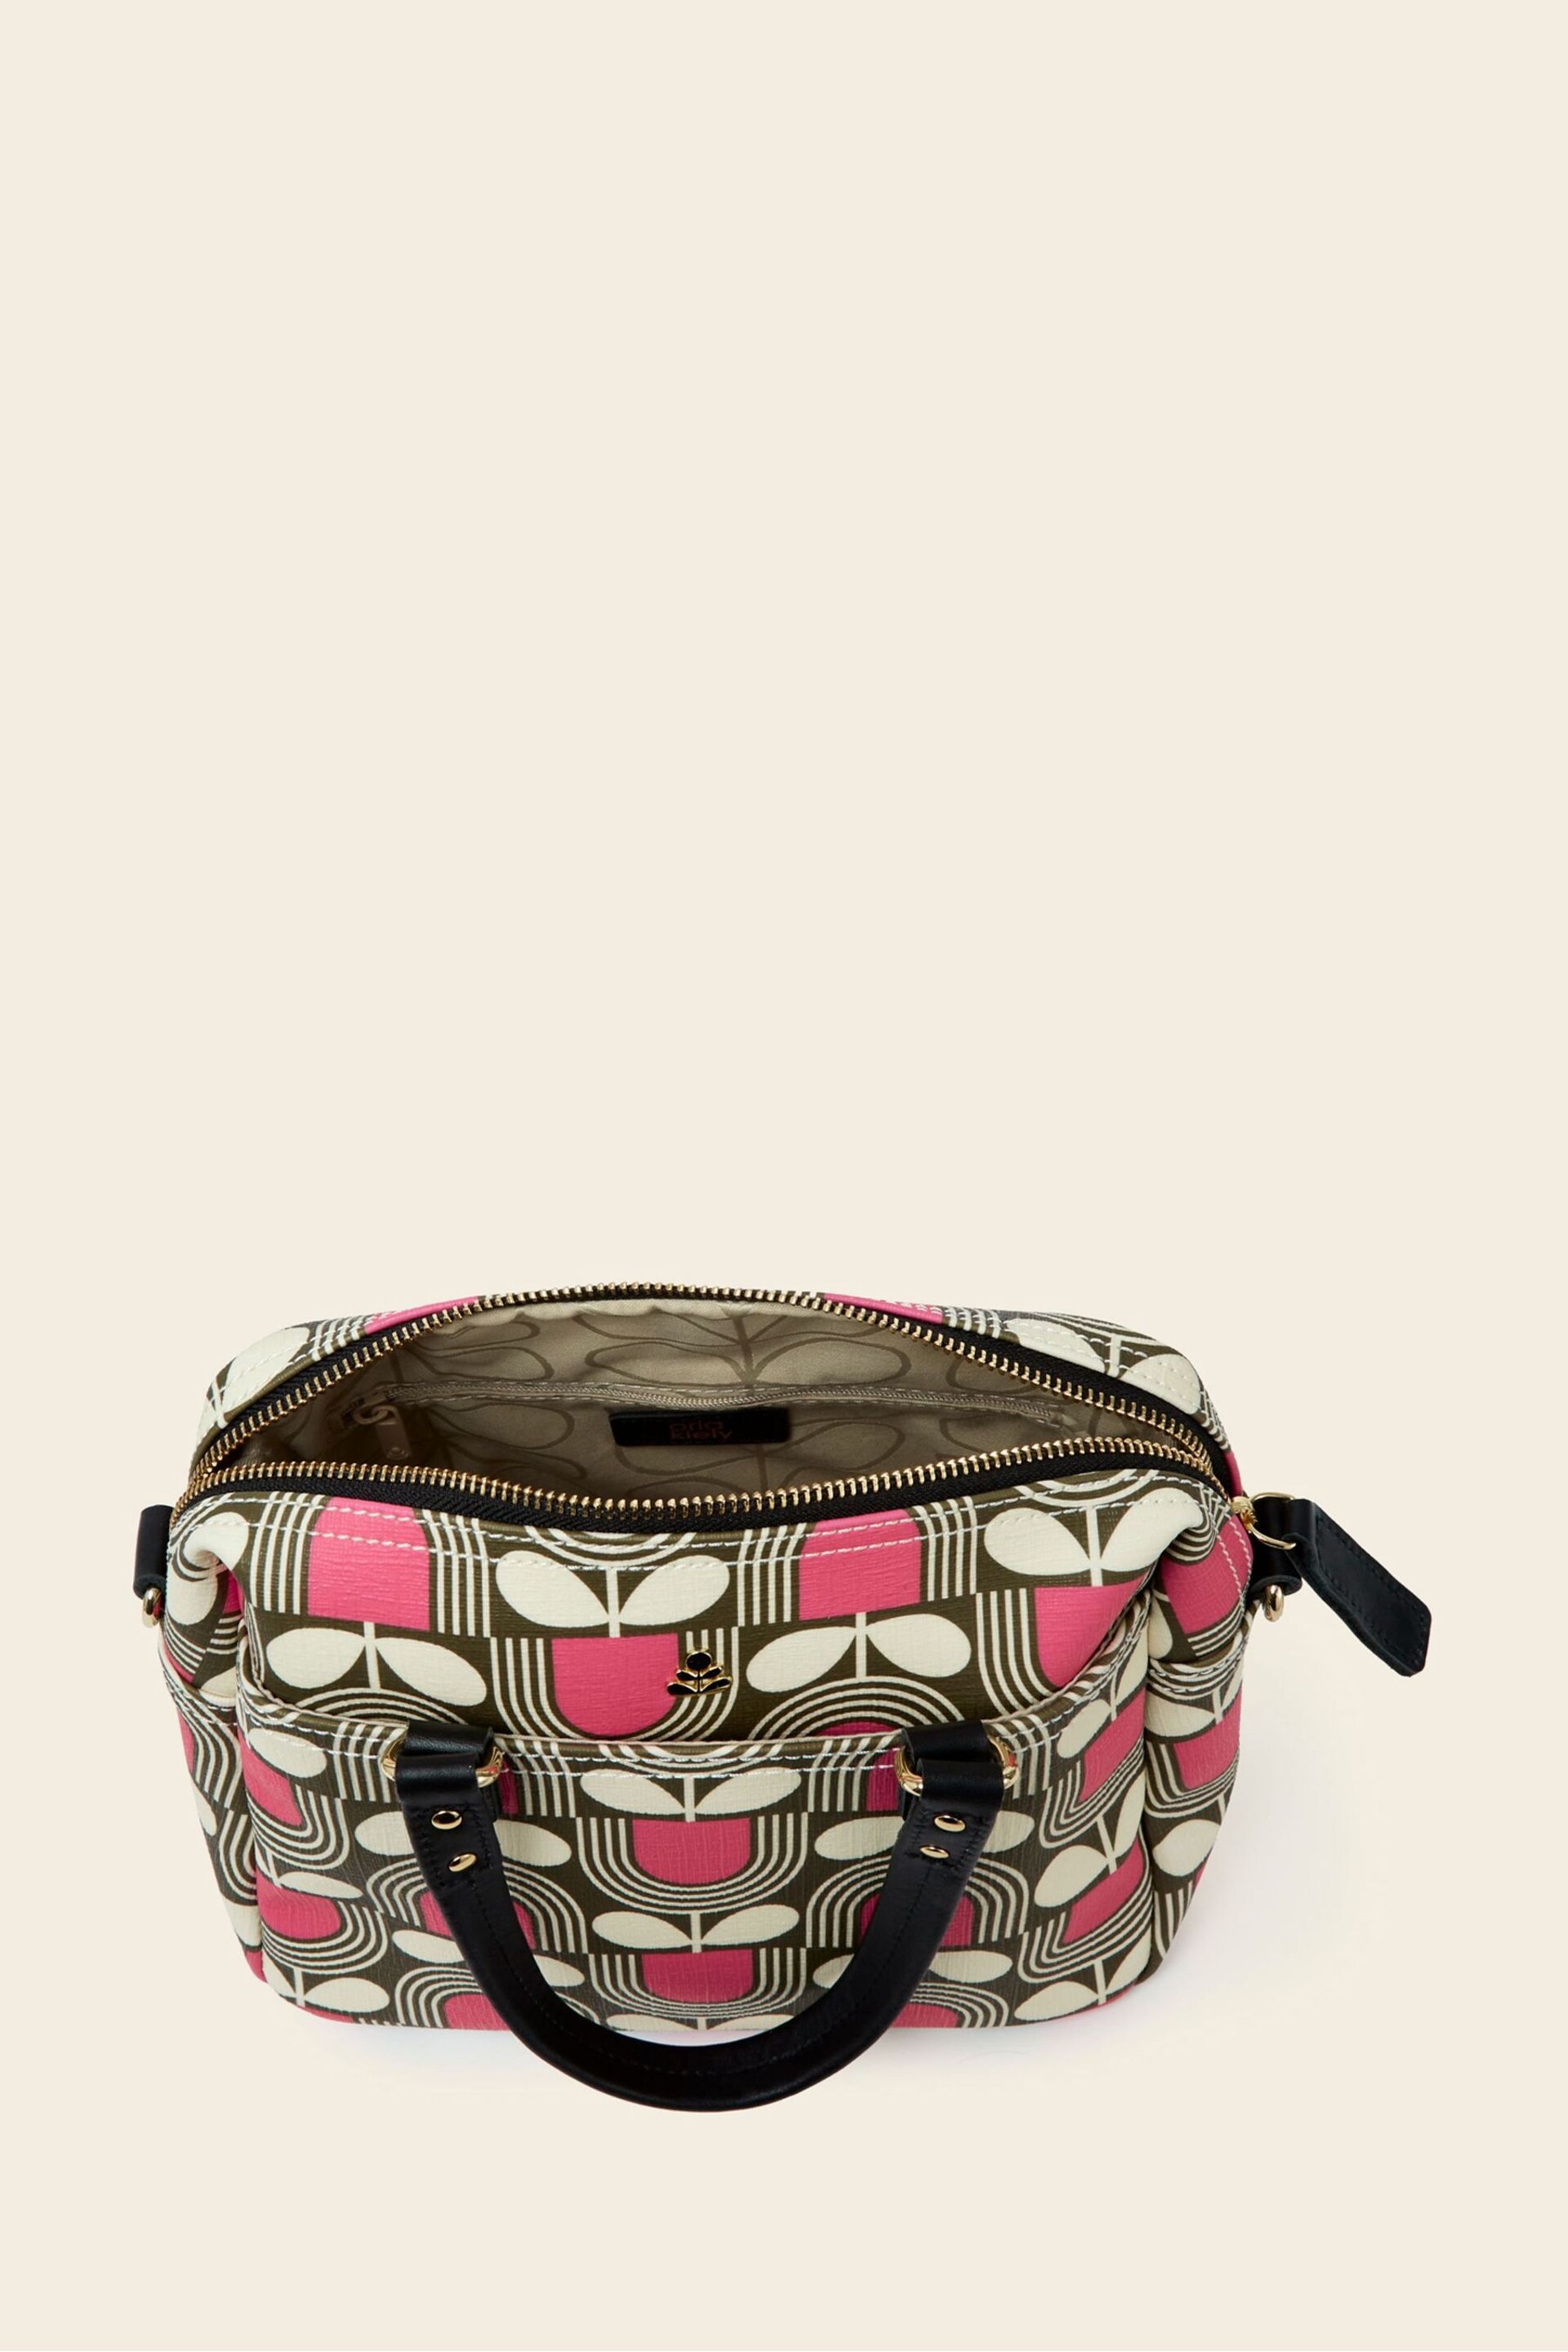 Orla Kiely Pink Mini Flynn Crossbody Bag - Image 4 of 4